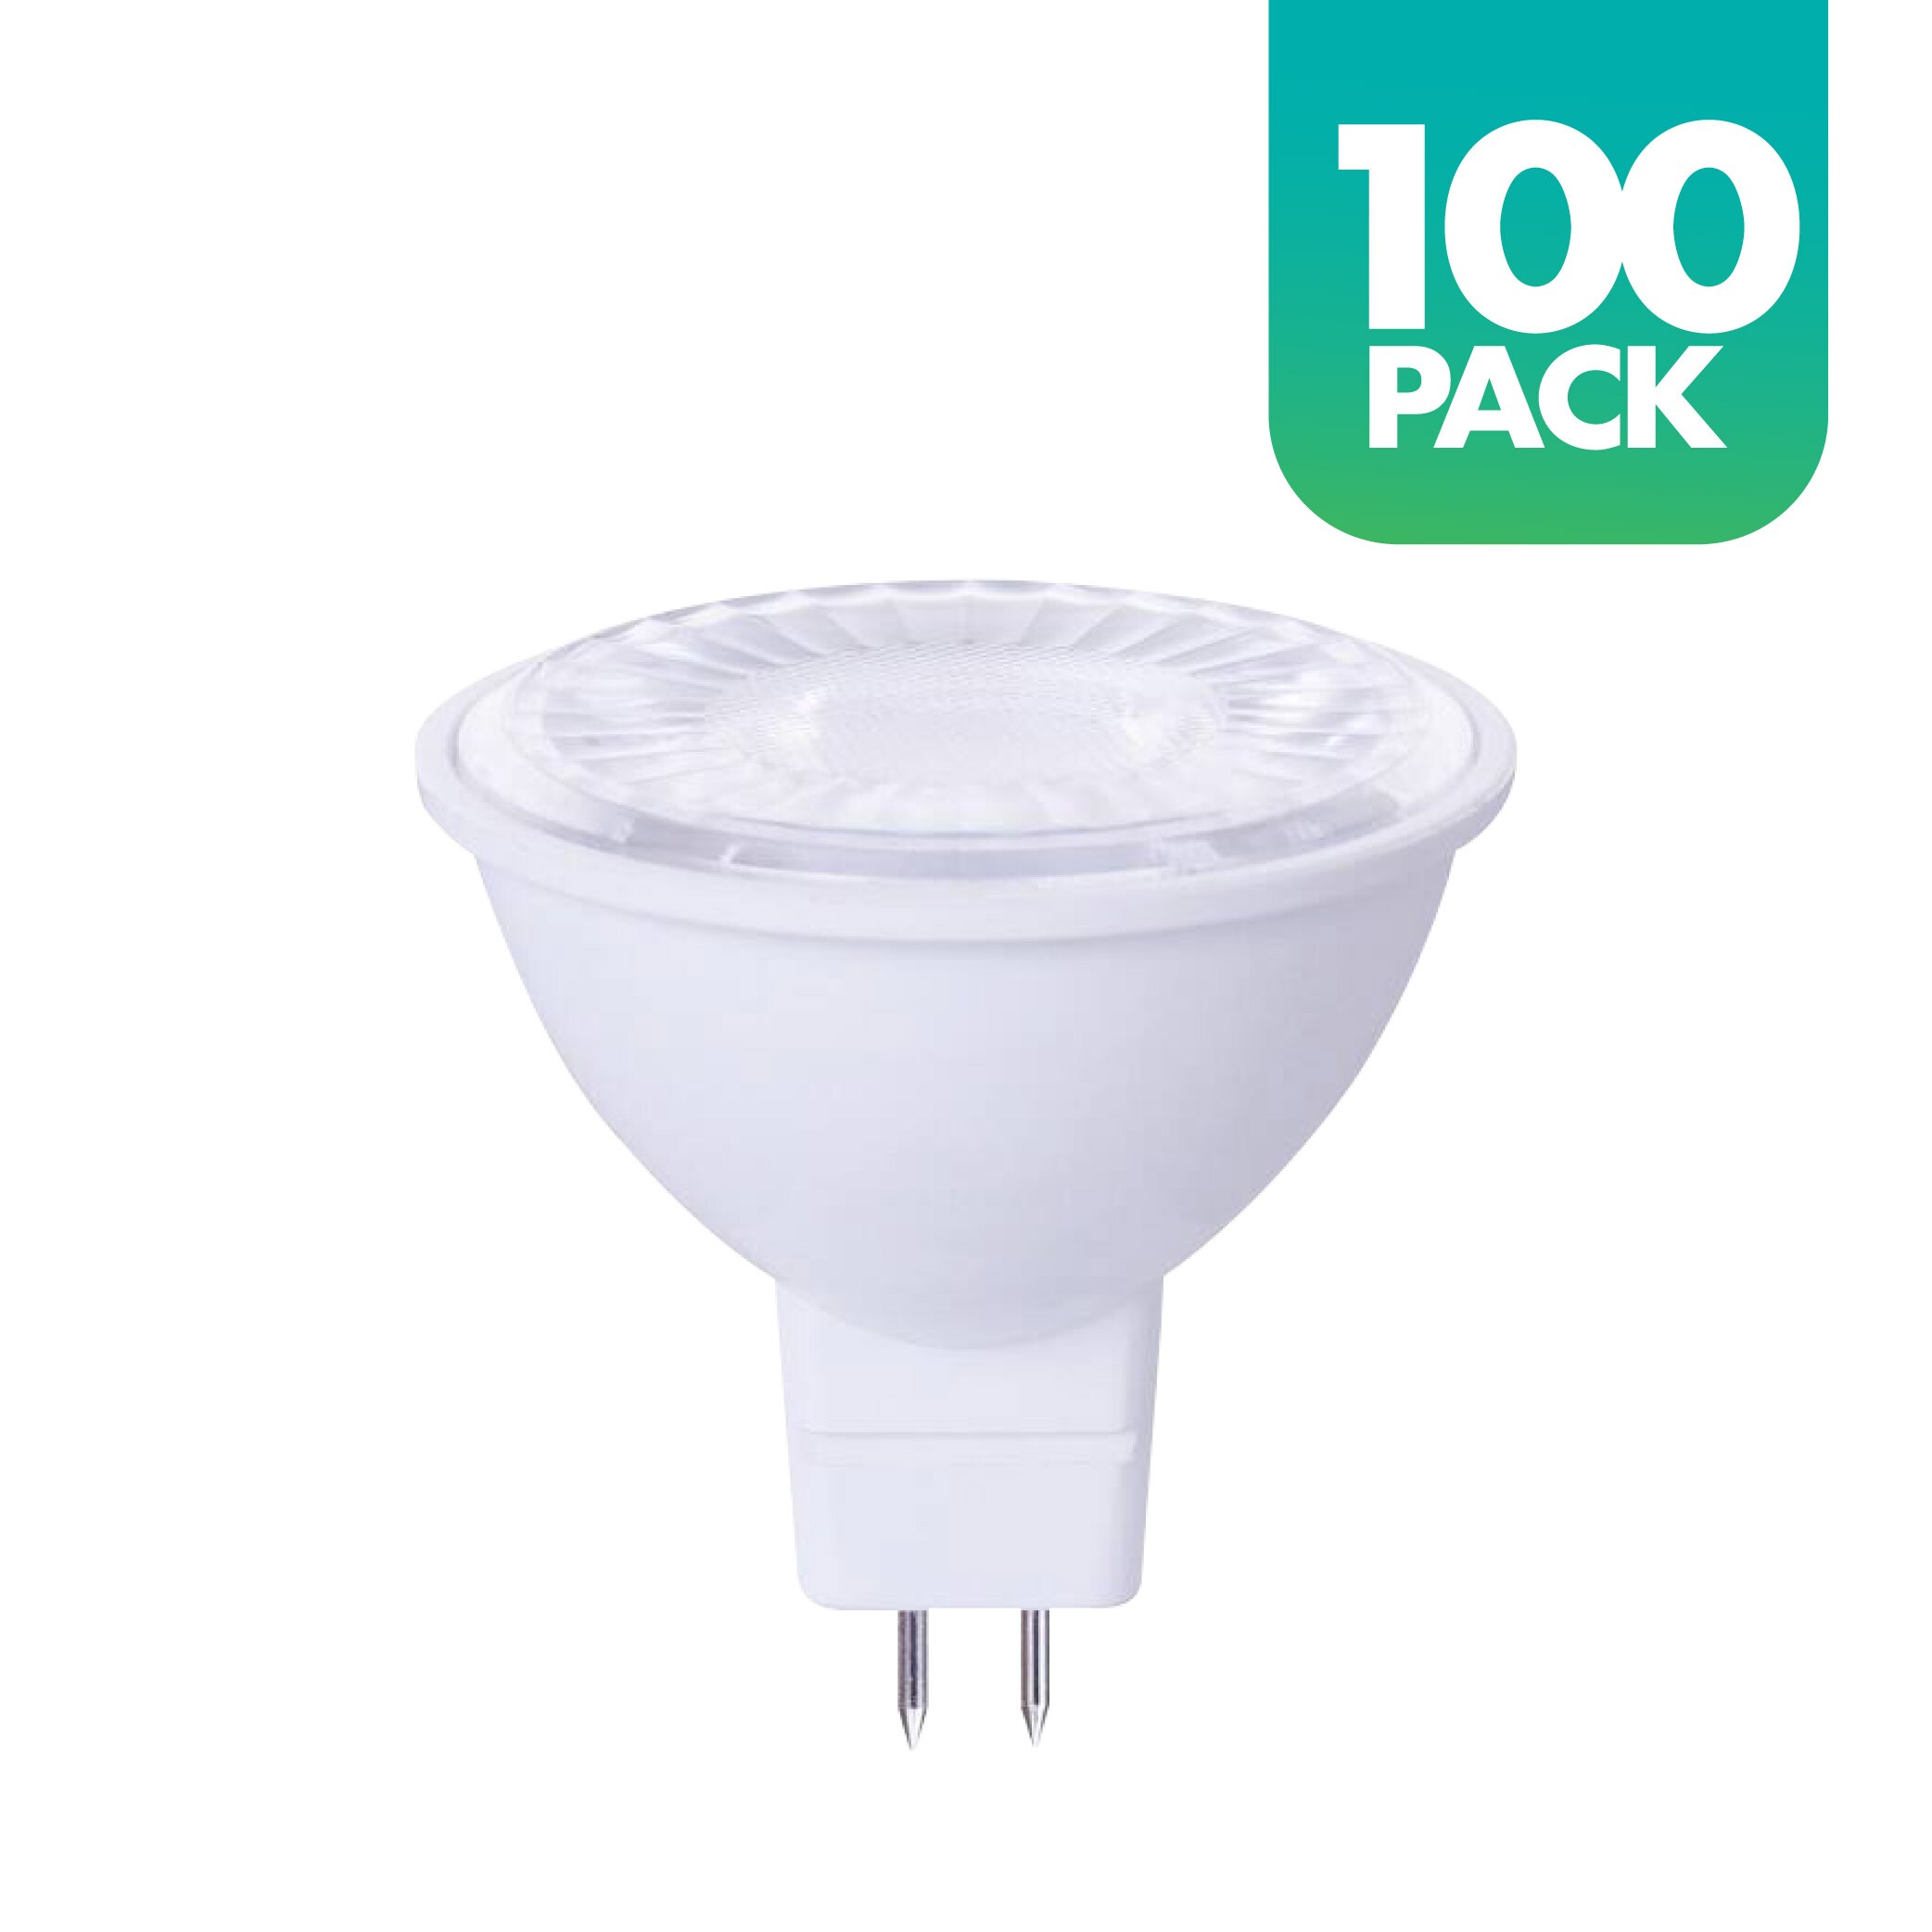 Incubus forstene højdepunkt Simply Conserve ENERGY STAR GU5.3 50-watt EQ 50-Watt EQ LED Mr16 Warm White  G5.3 Base Dimmable Flood Light Bulb (100-Pack) in the Spot & Flood LED  Light Bulbs department at Lowes.com